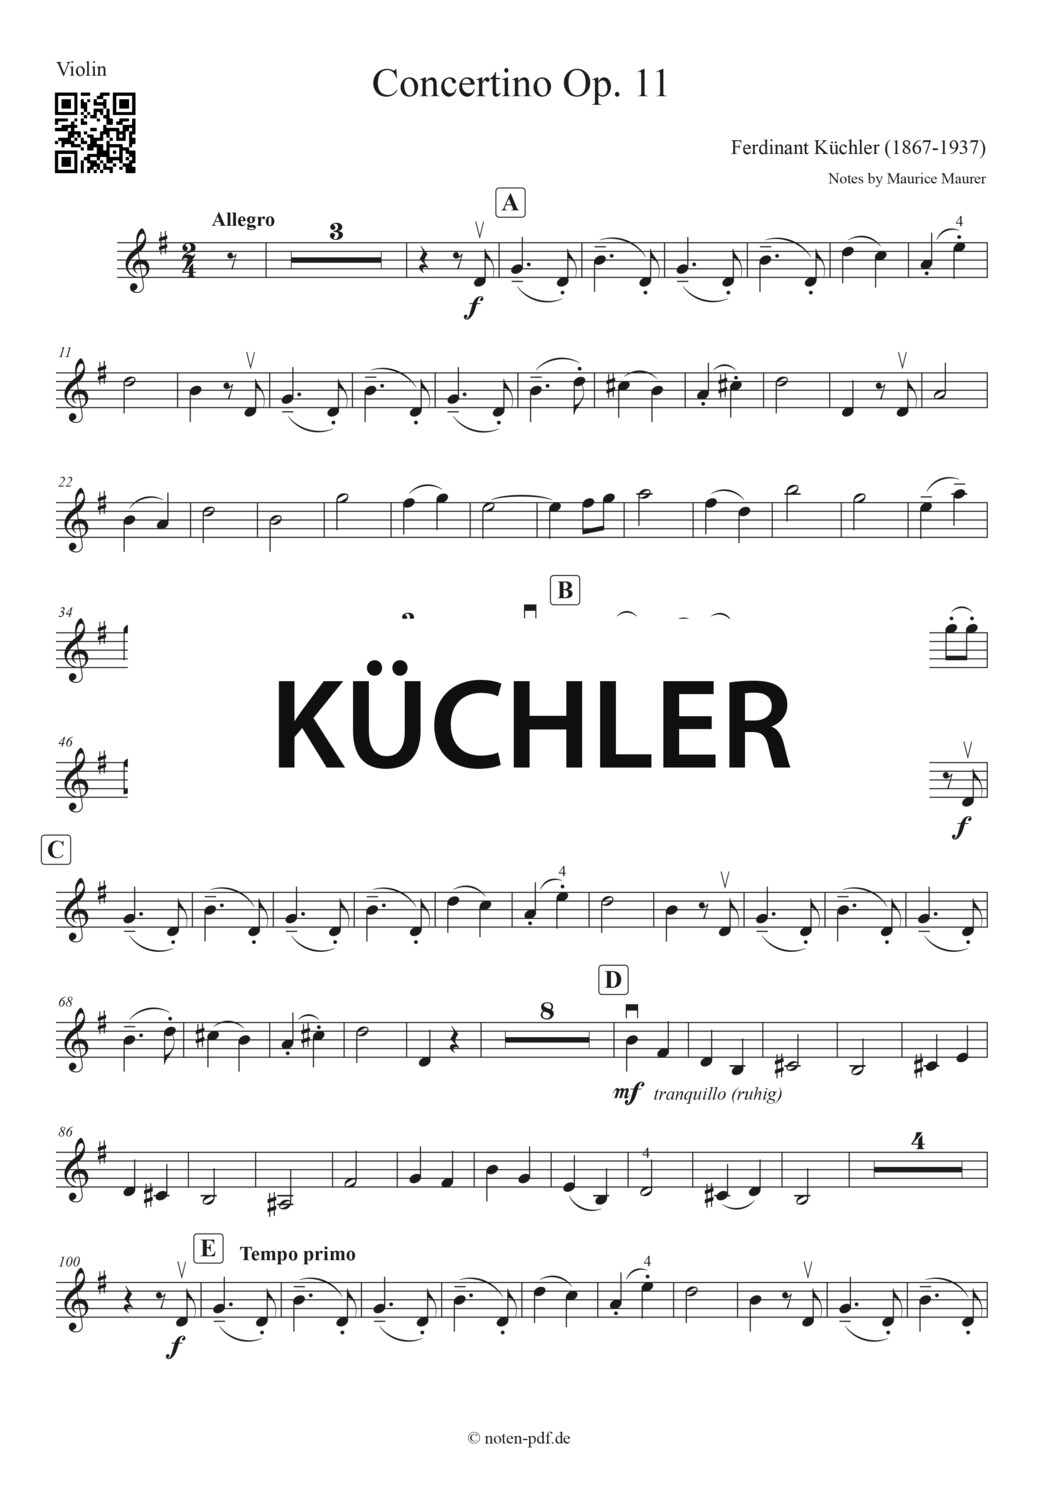 Küchler: Concertino Op. 11 - 3. Movement (Violin Sheet Music)